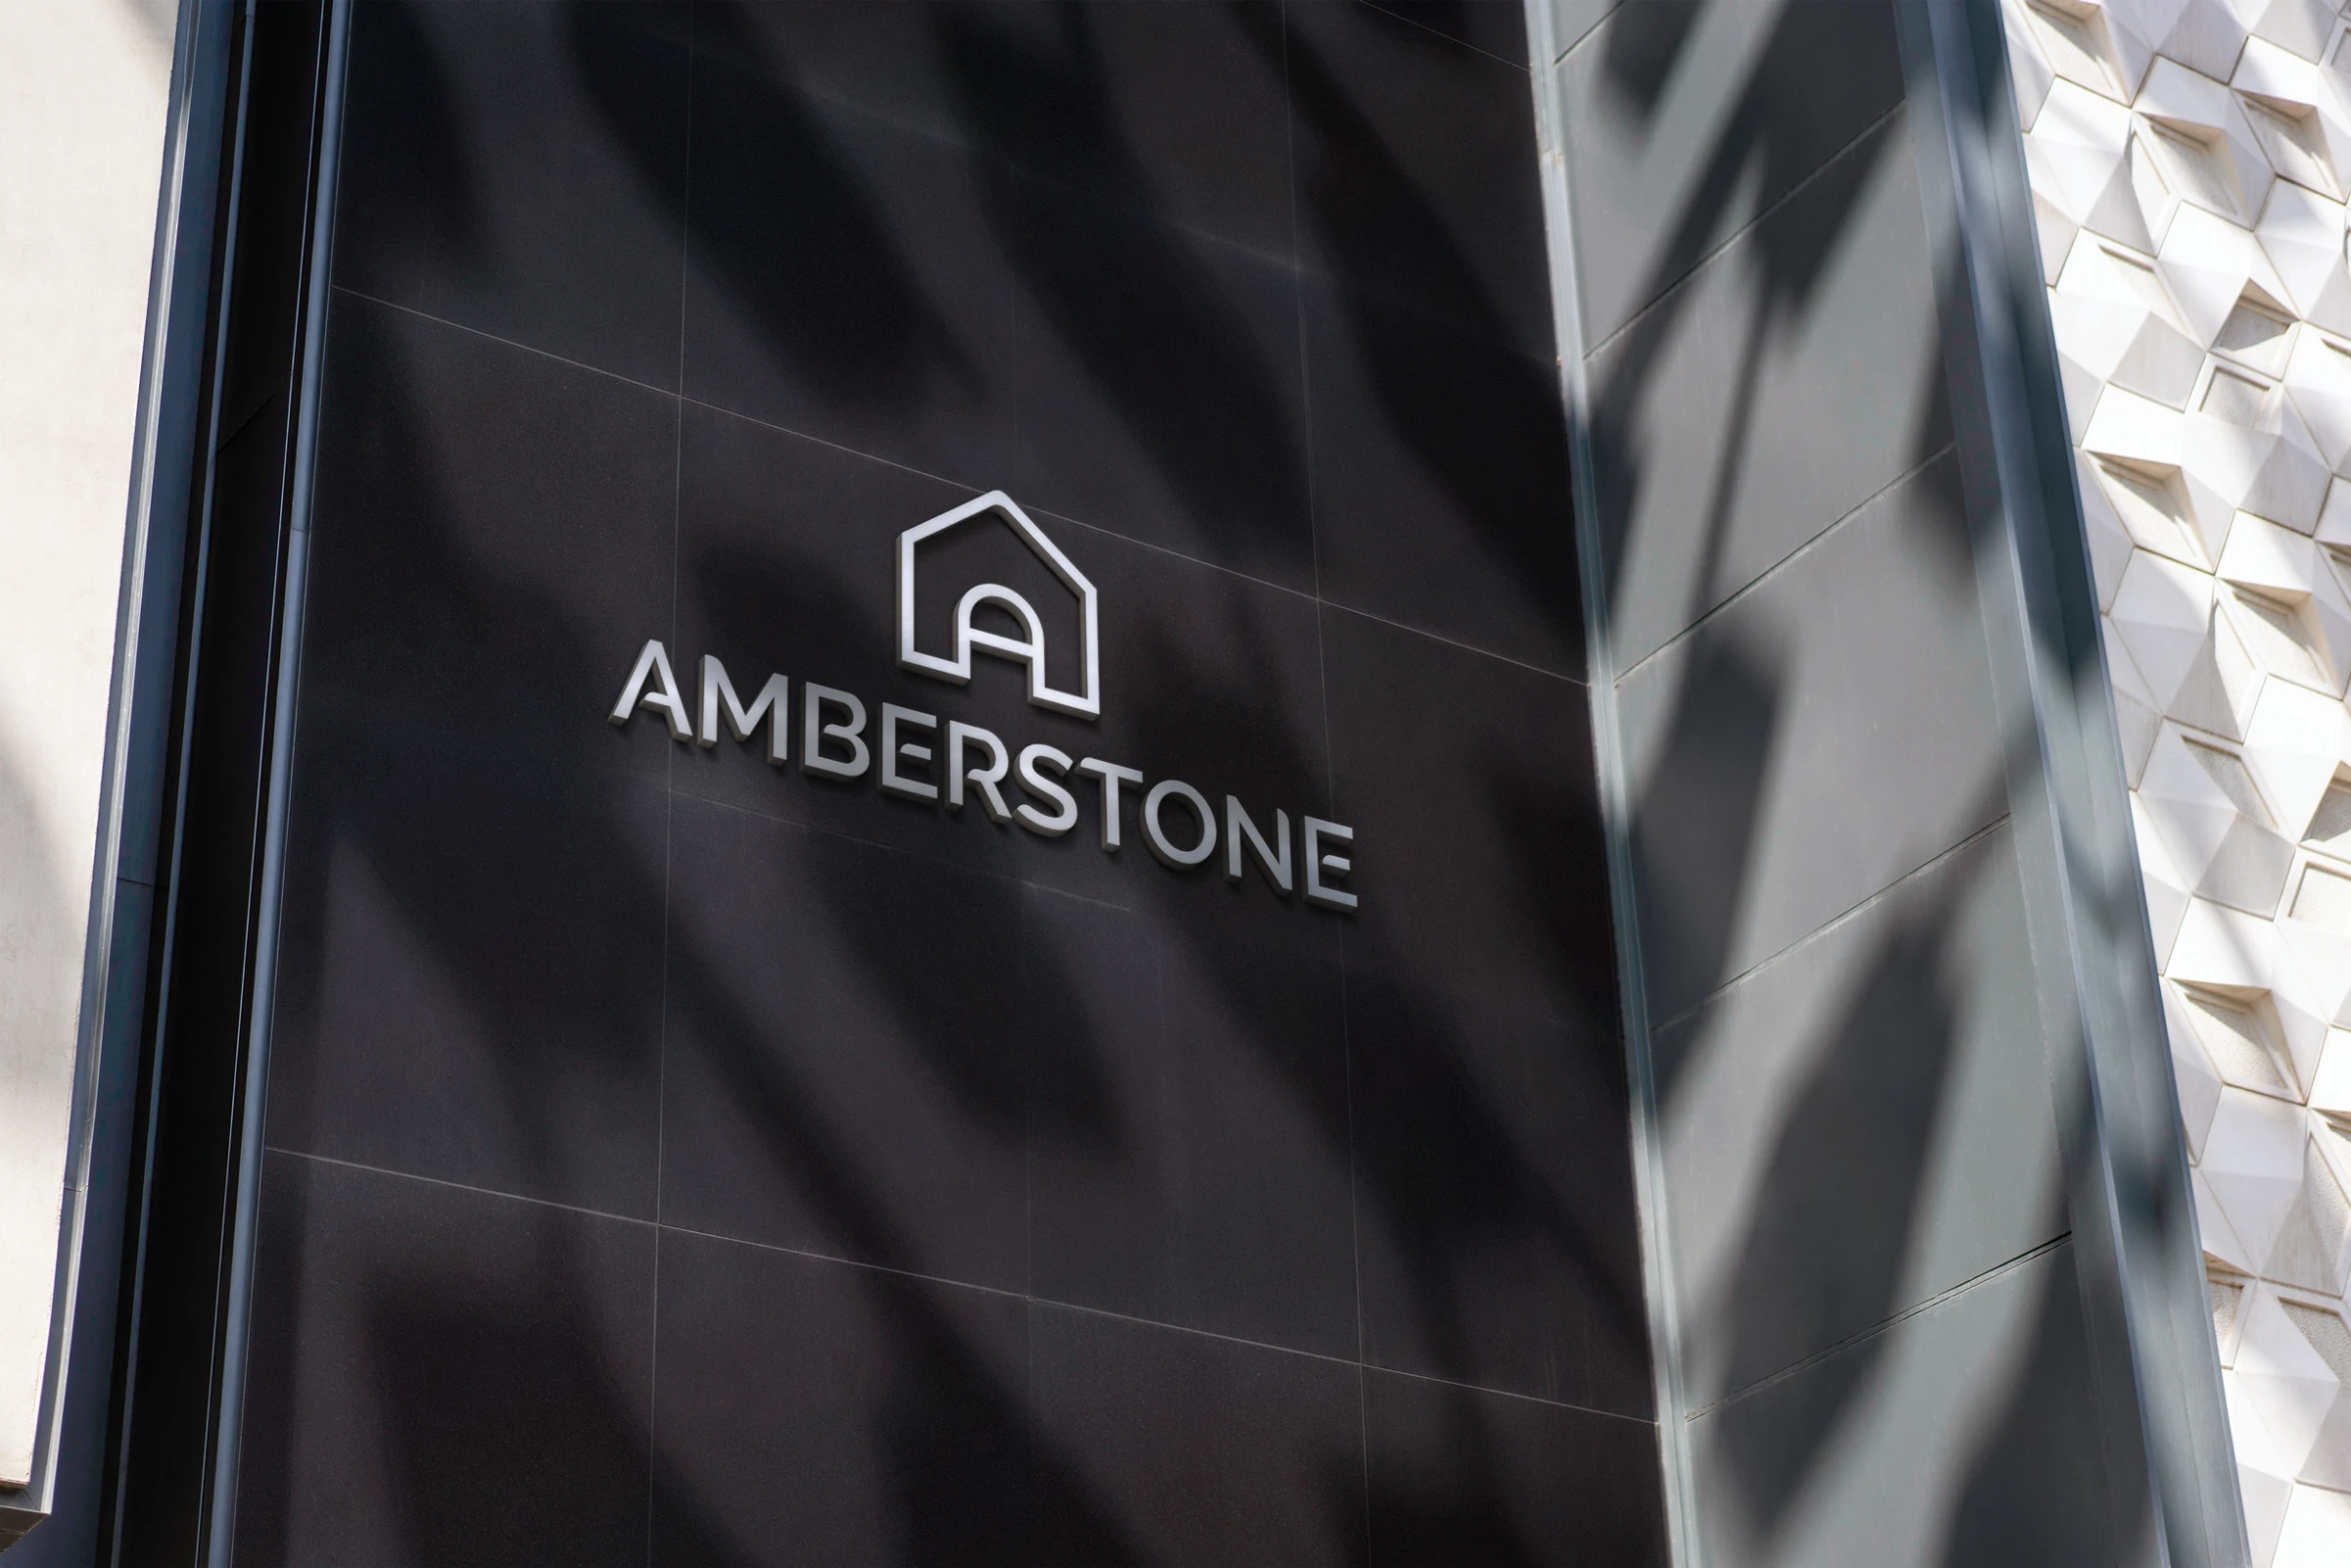 Amberstone: Work by Skyfield Co